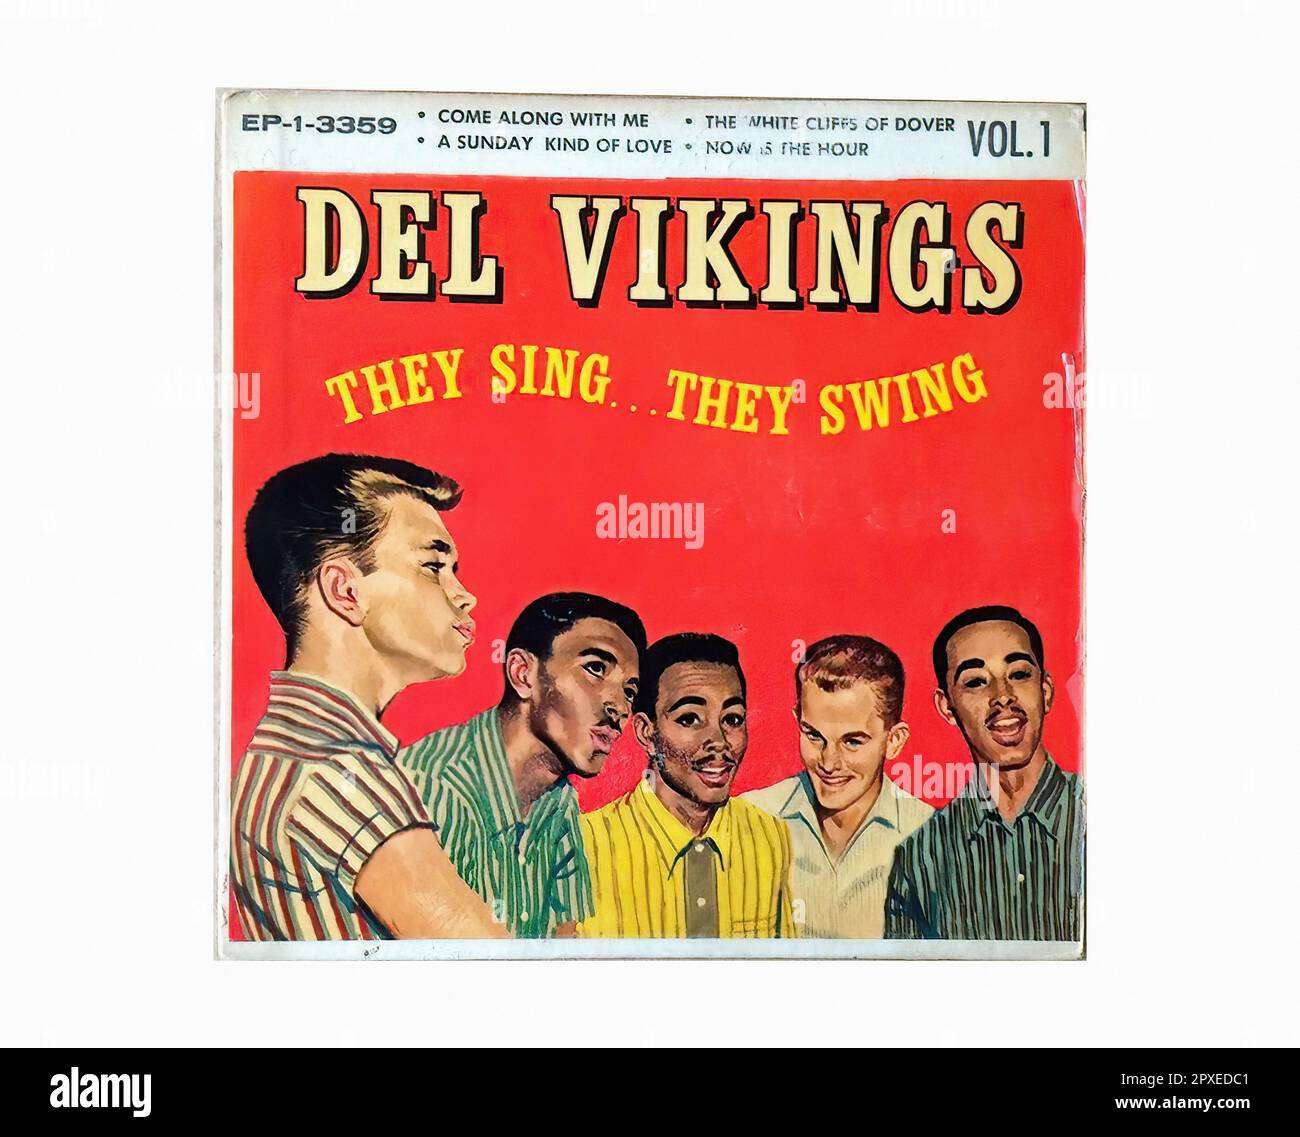 Del Vikings - 1957 01 A - Vintage 45 R.P.M Music Vinyl Record Stock Photo